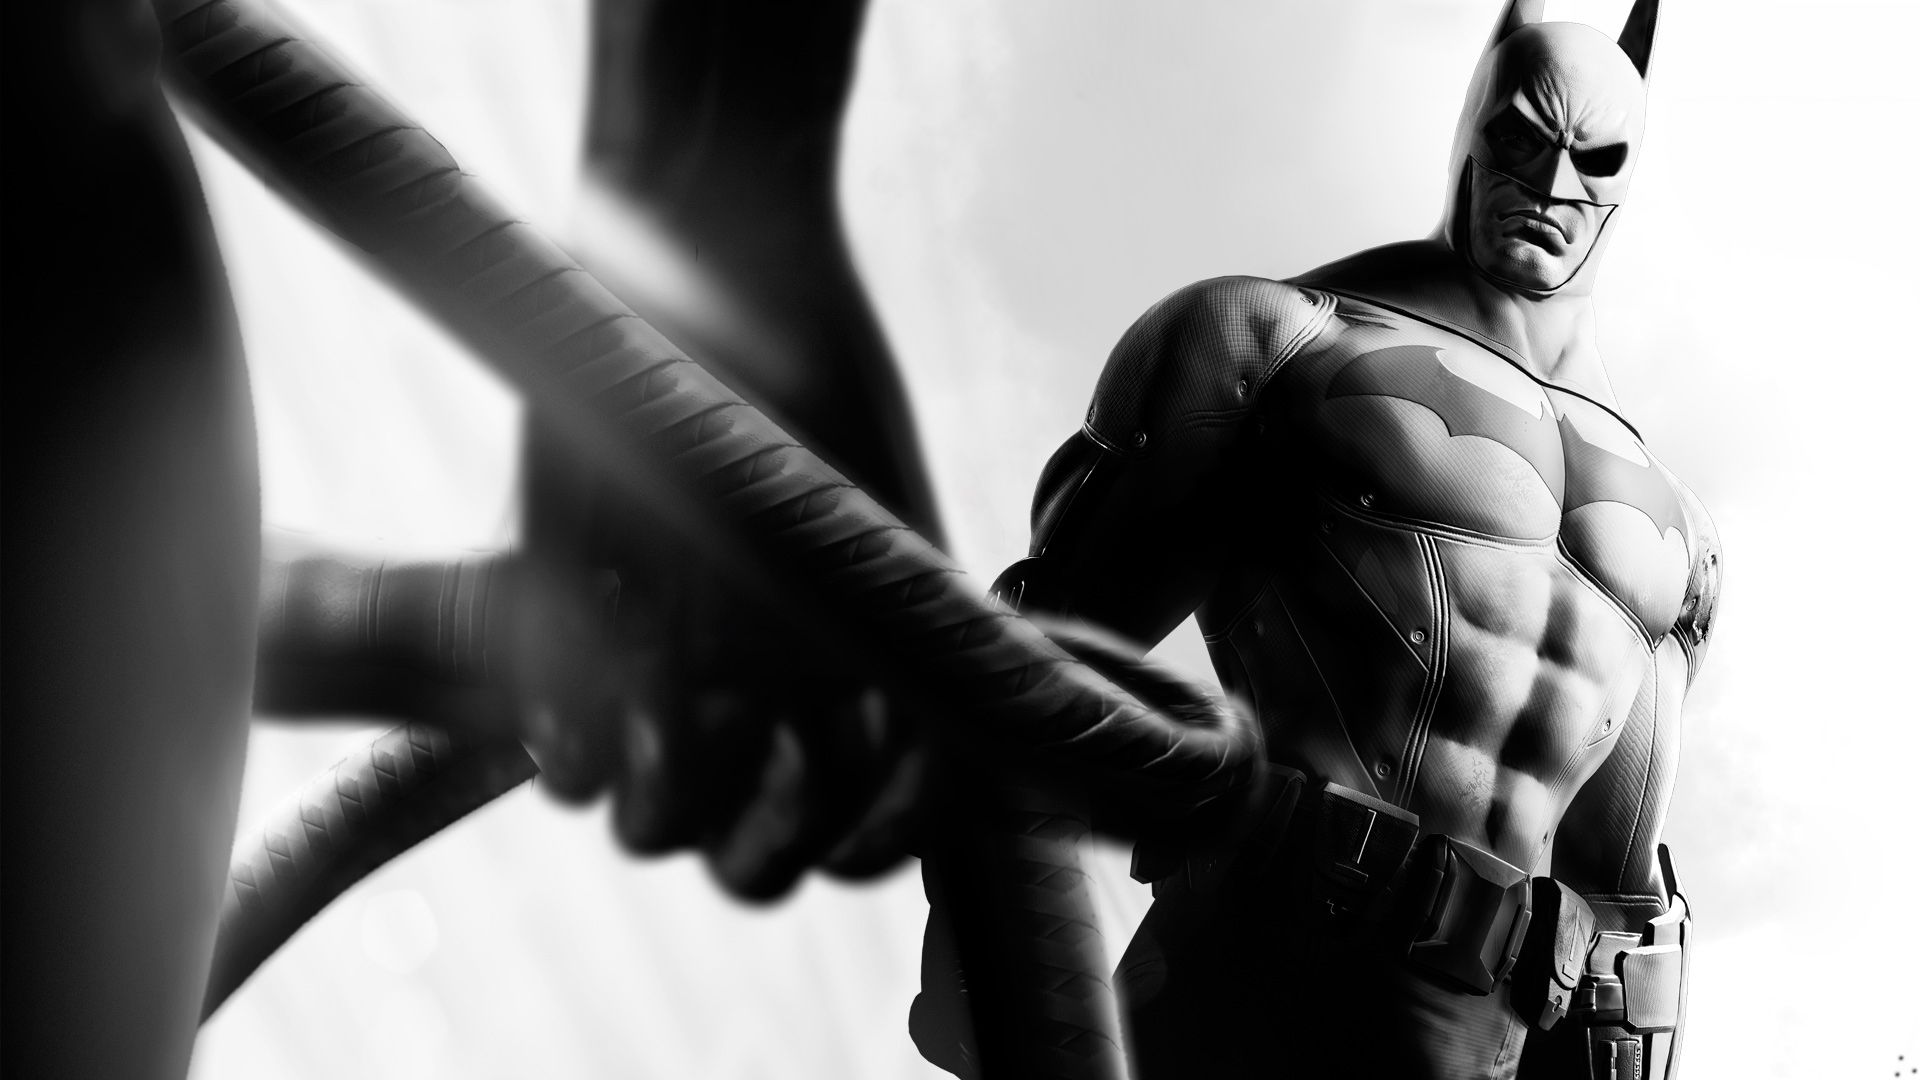 batman arkham city wallpaper,batman,fictional character,statue,superhero,muscle